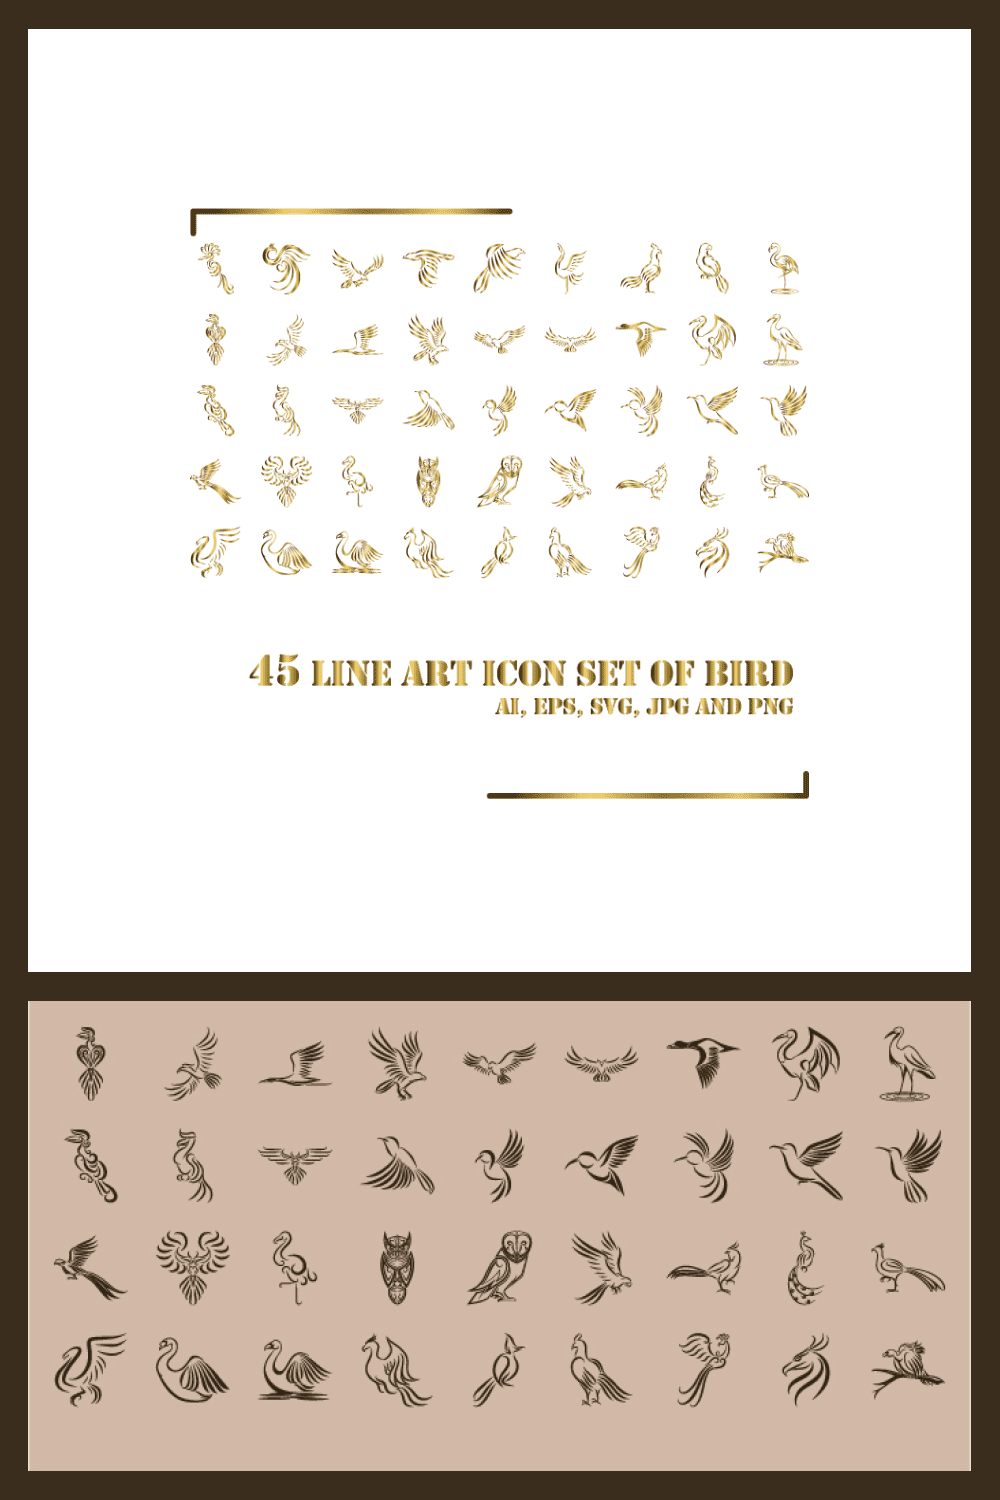 Line Art Icon Set of Birds - MasterBundles - Pinterest Collage Image.